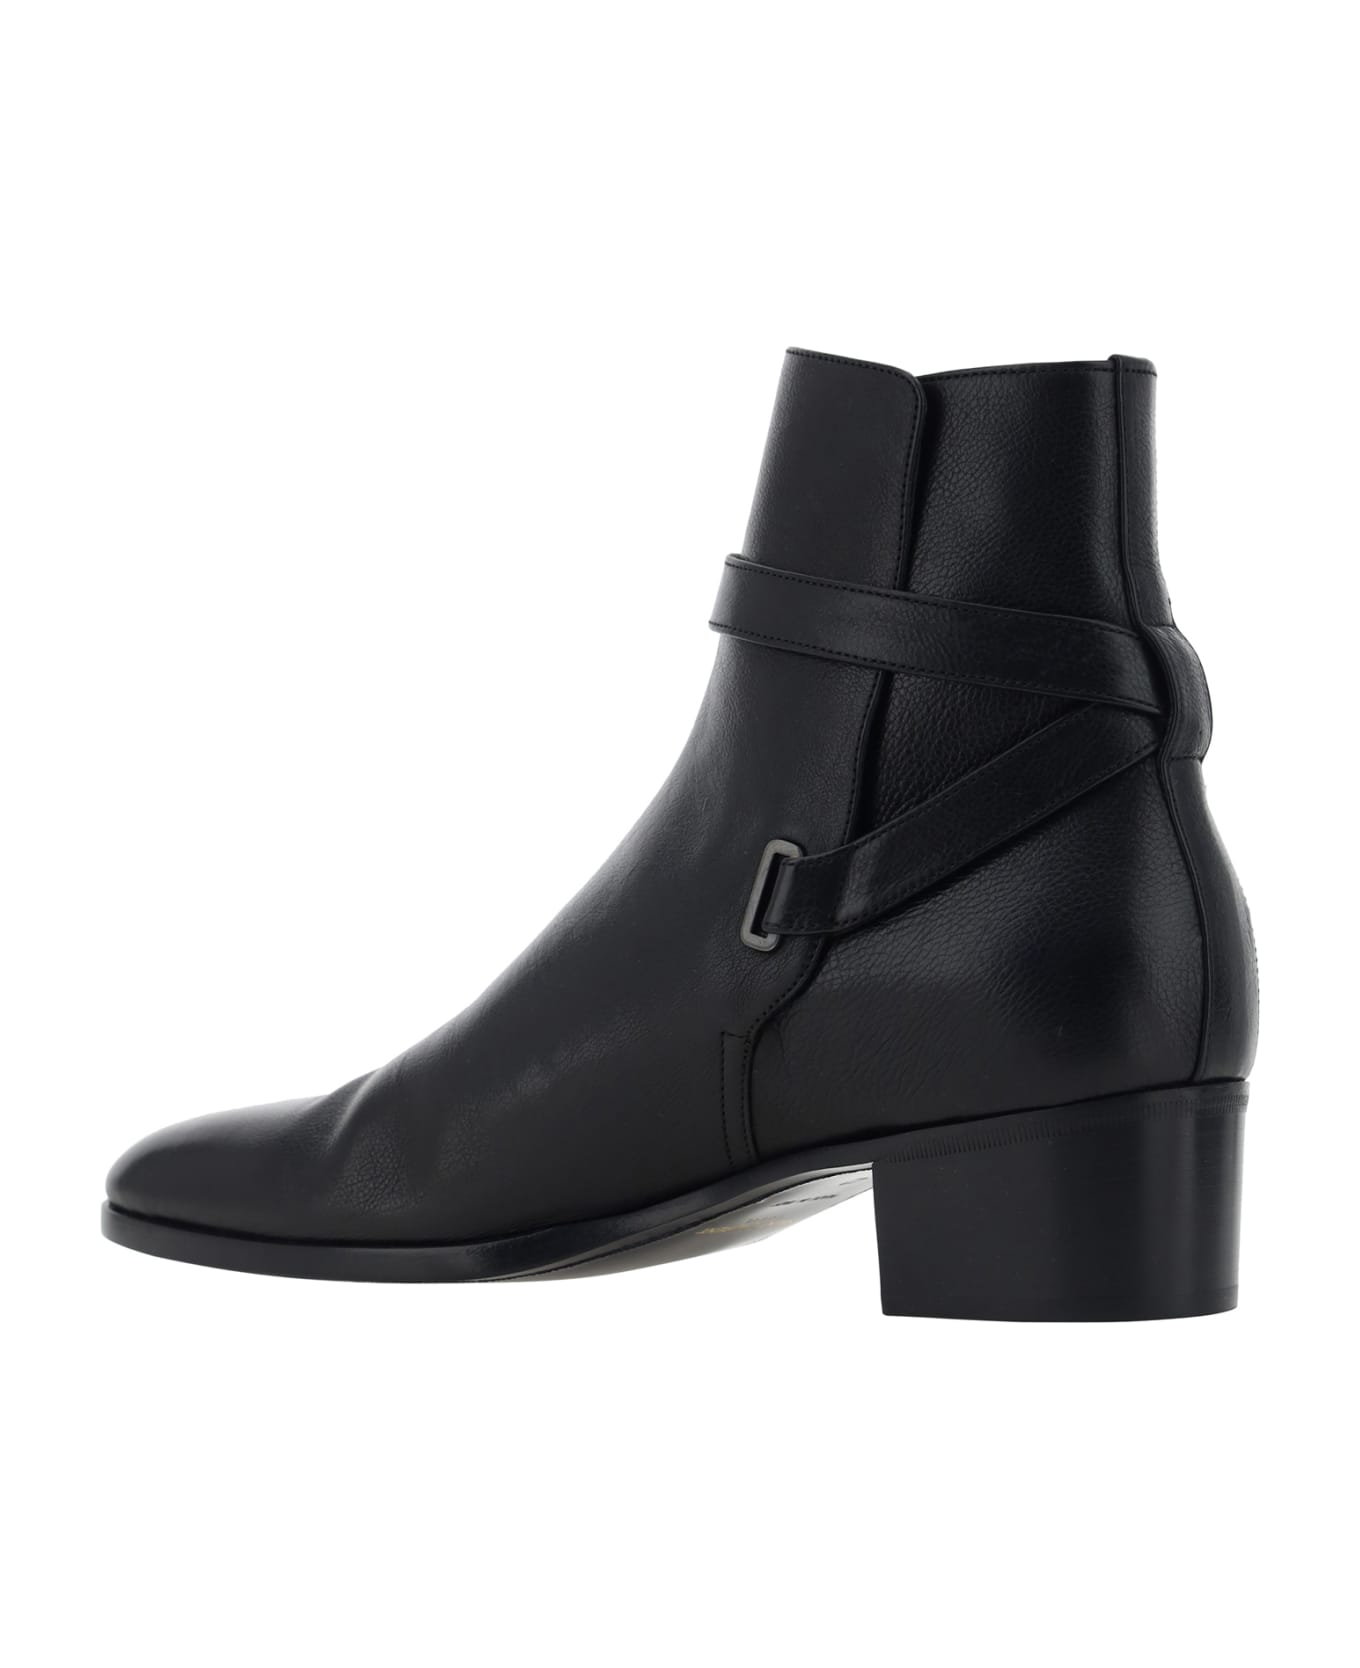 Saint Laurent Ankle Boots - Nero ブーツ